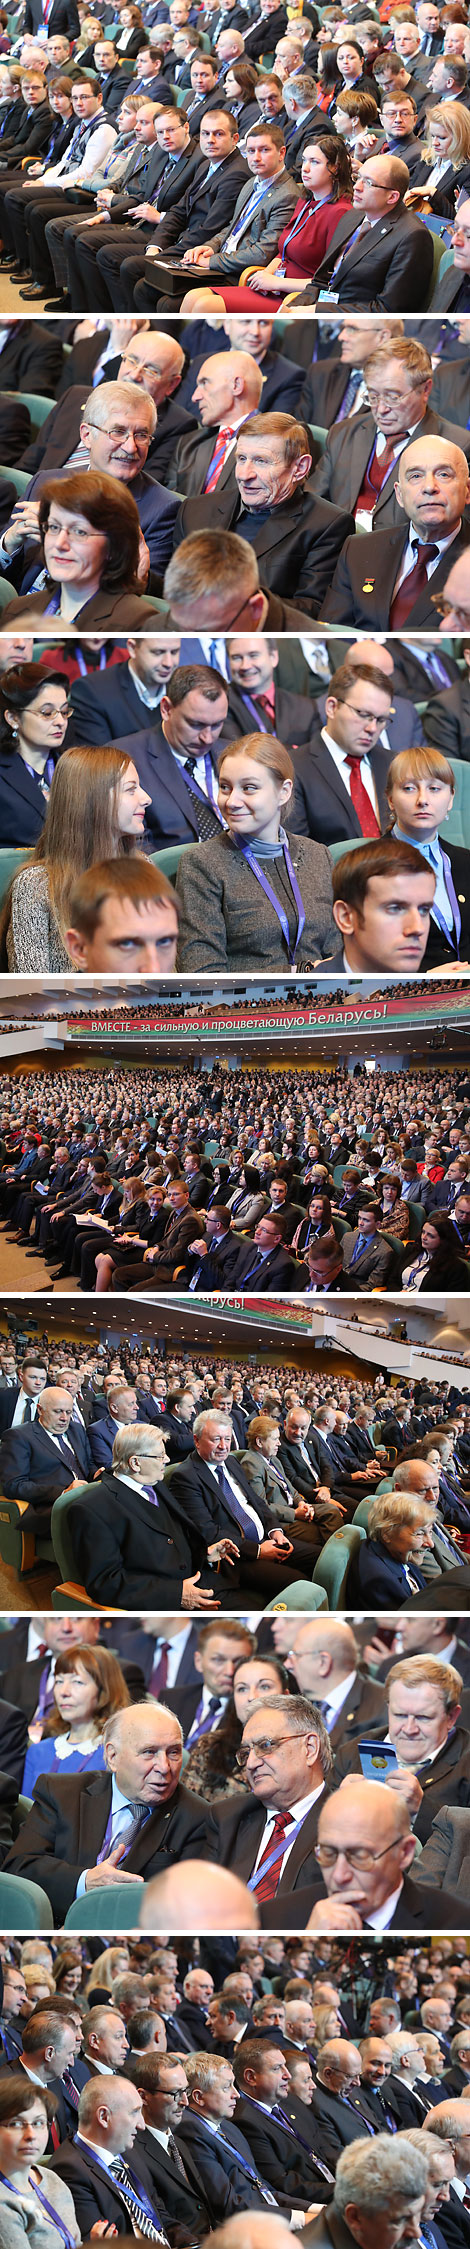 Second Congress of Scientists of Belarus in Minsk